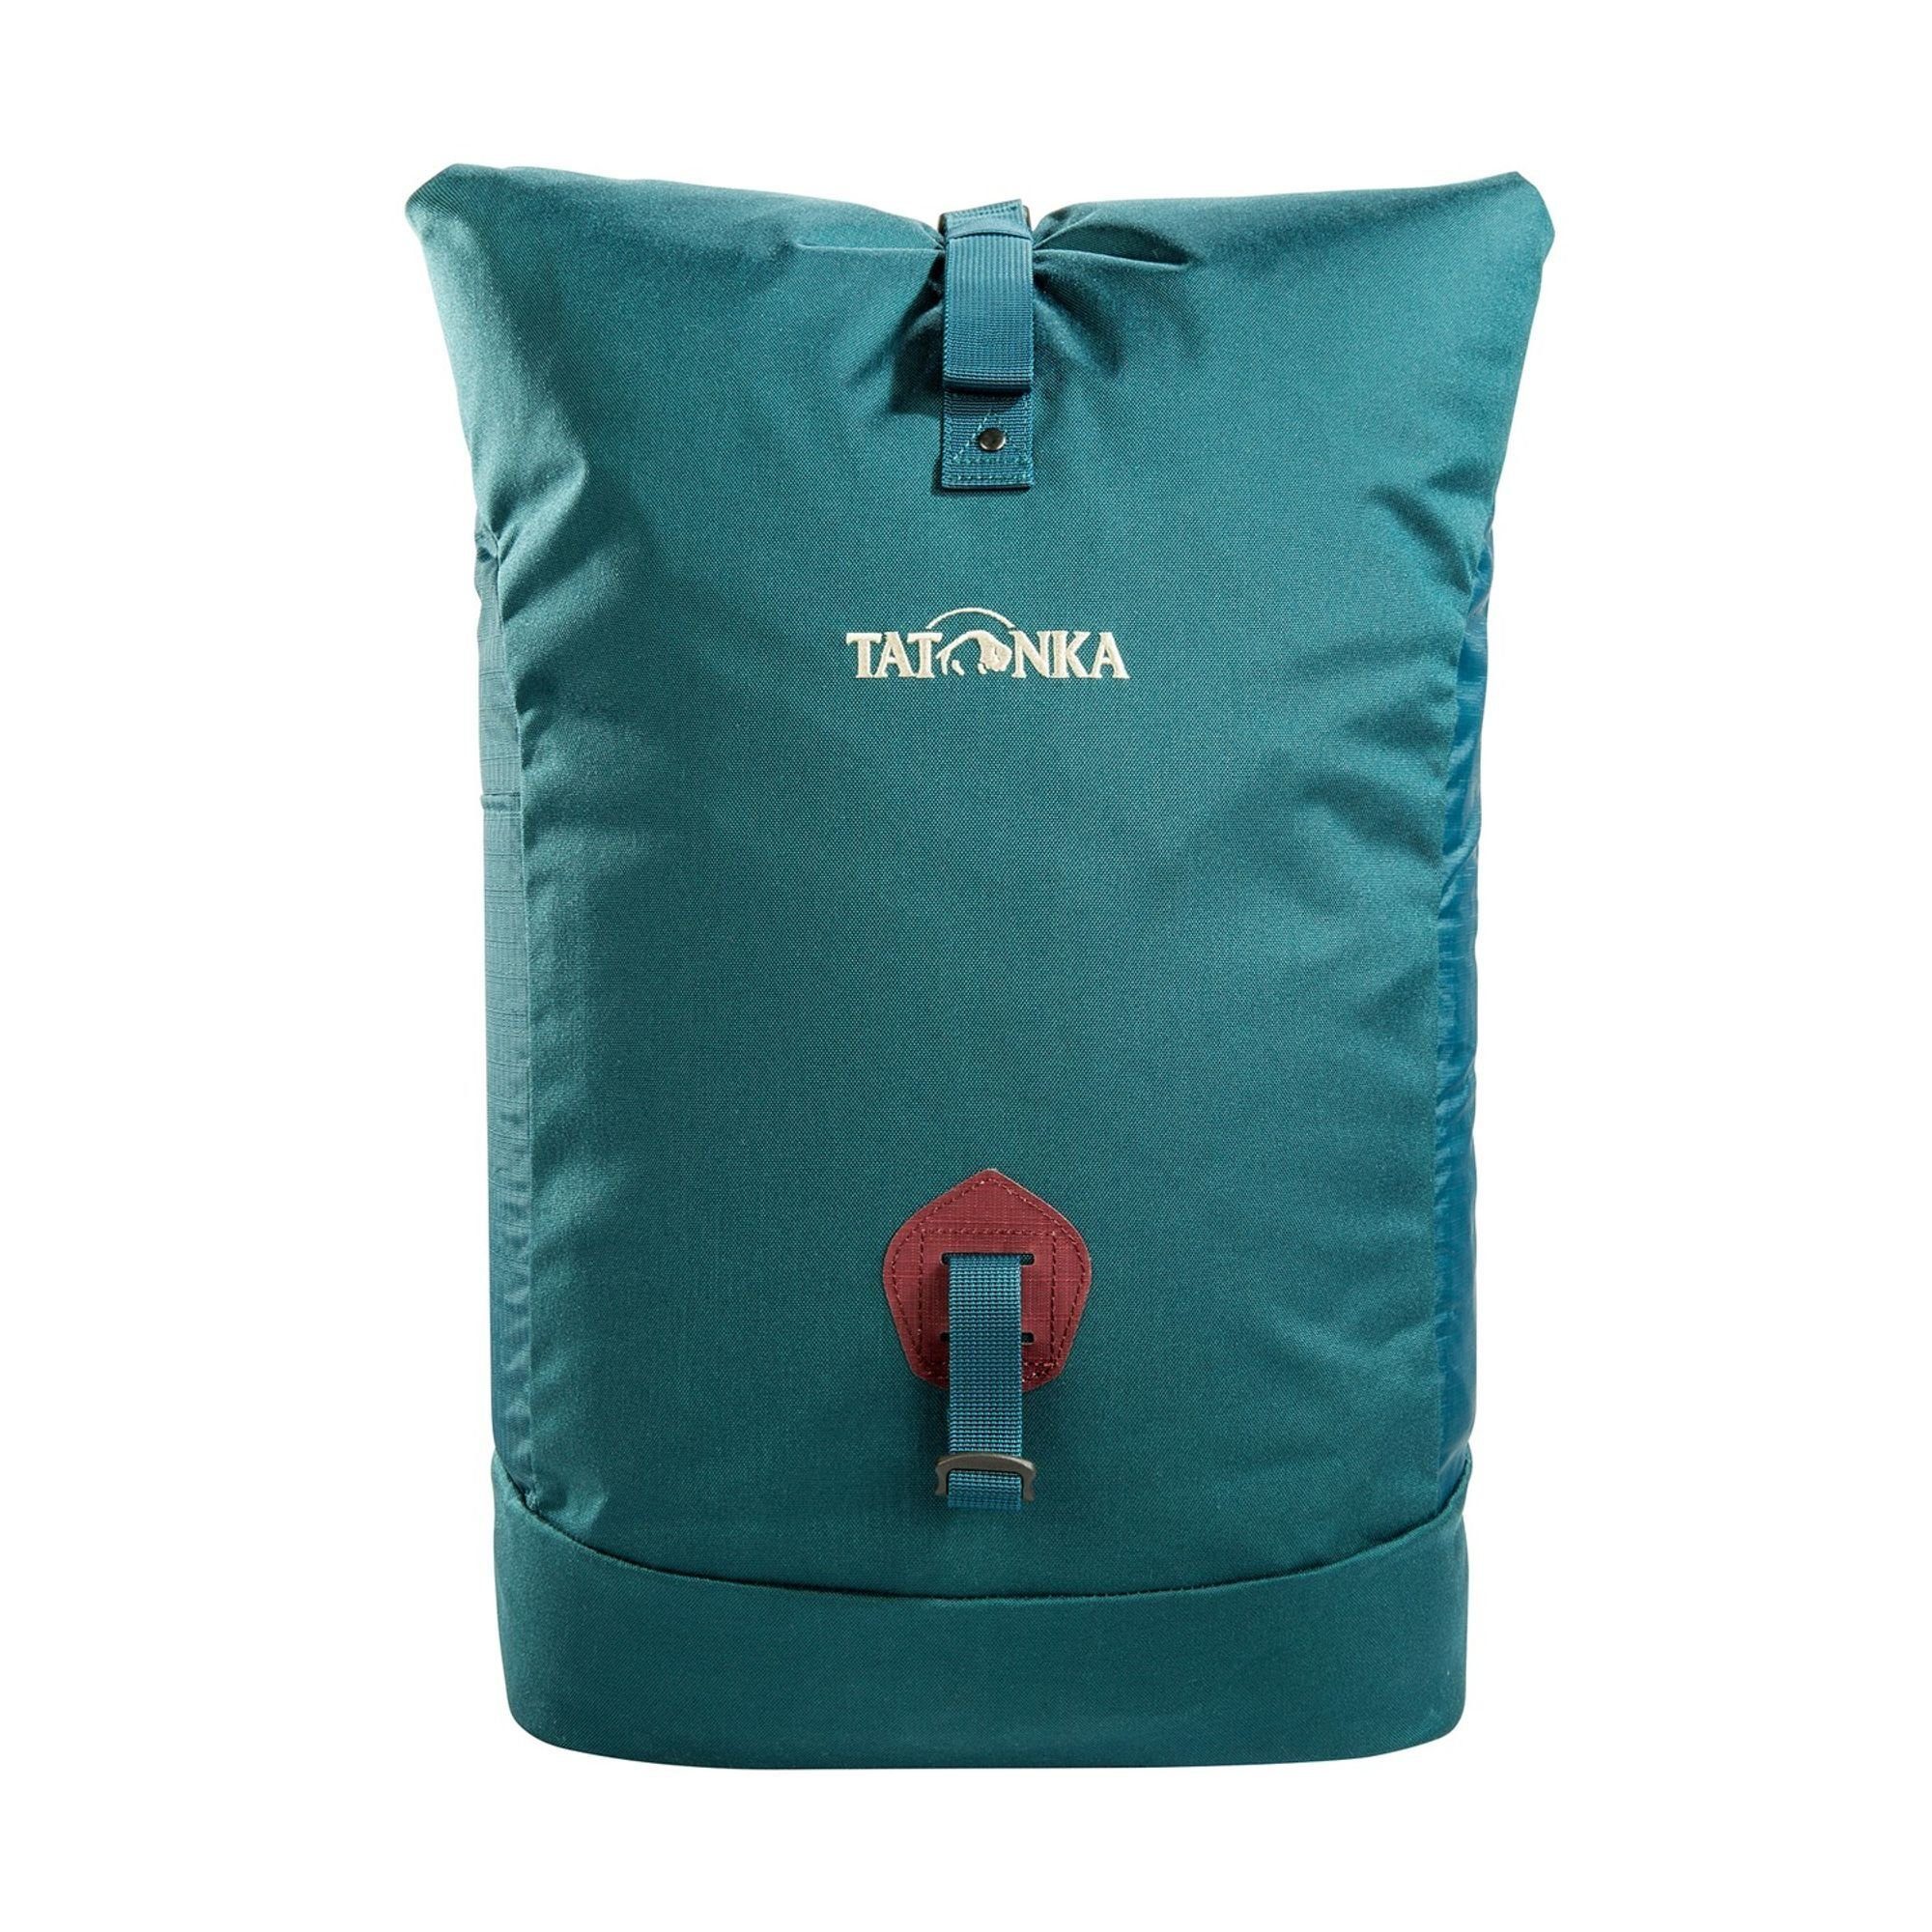 TATONKA® Daypack Grip Rolltop Pack, green Polyamid teal